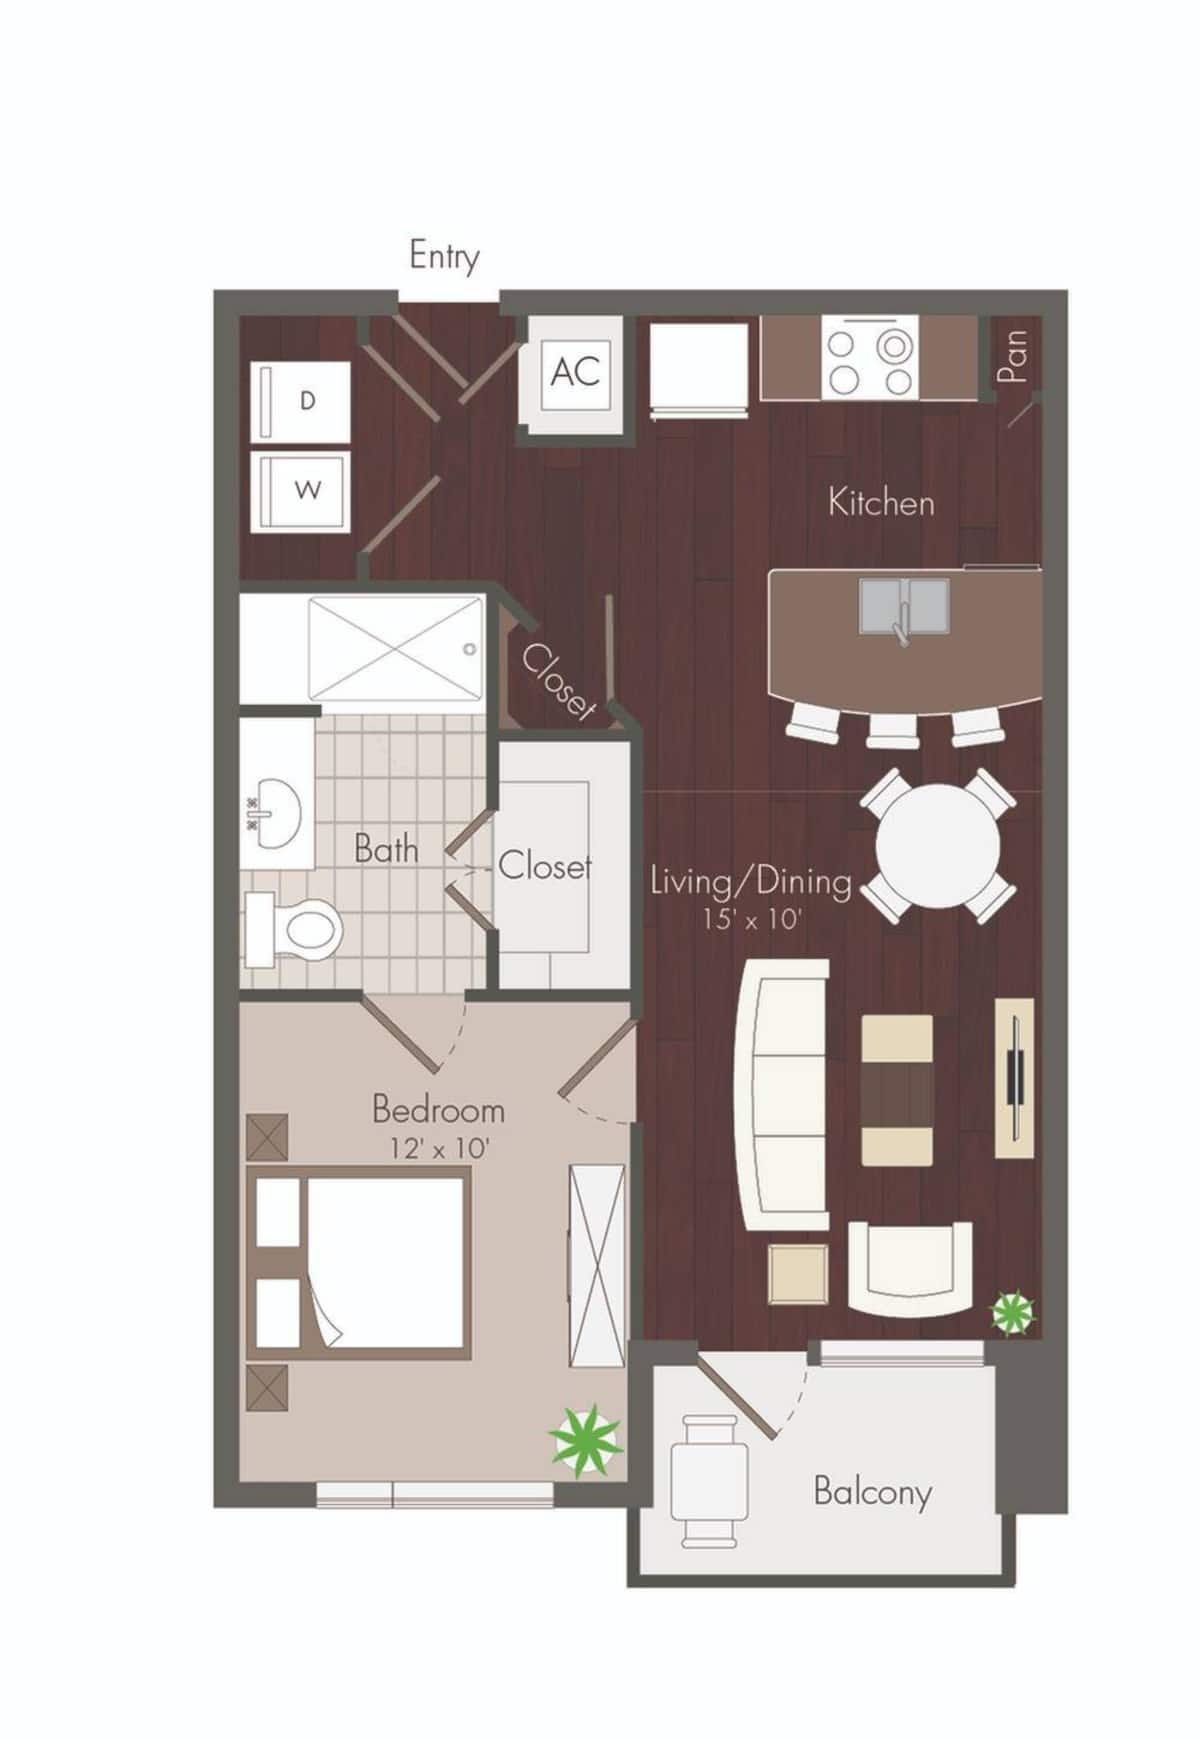 Floorplan diagram for Asbury, showing 1 bedroom